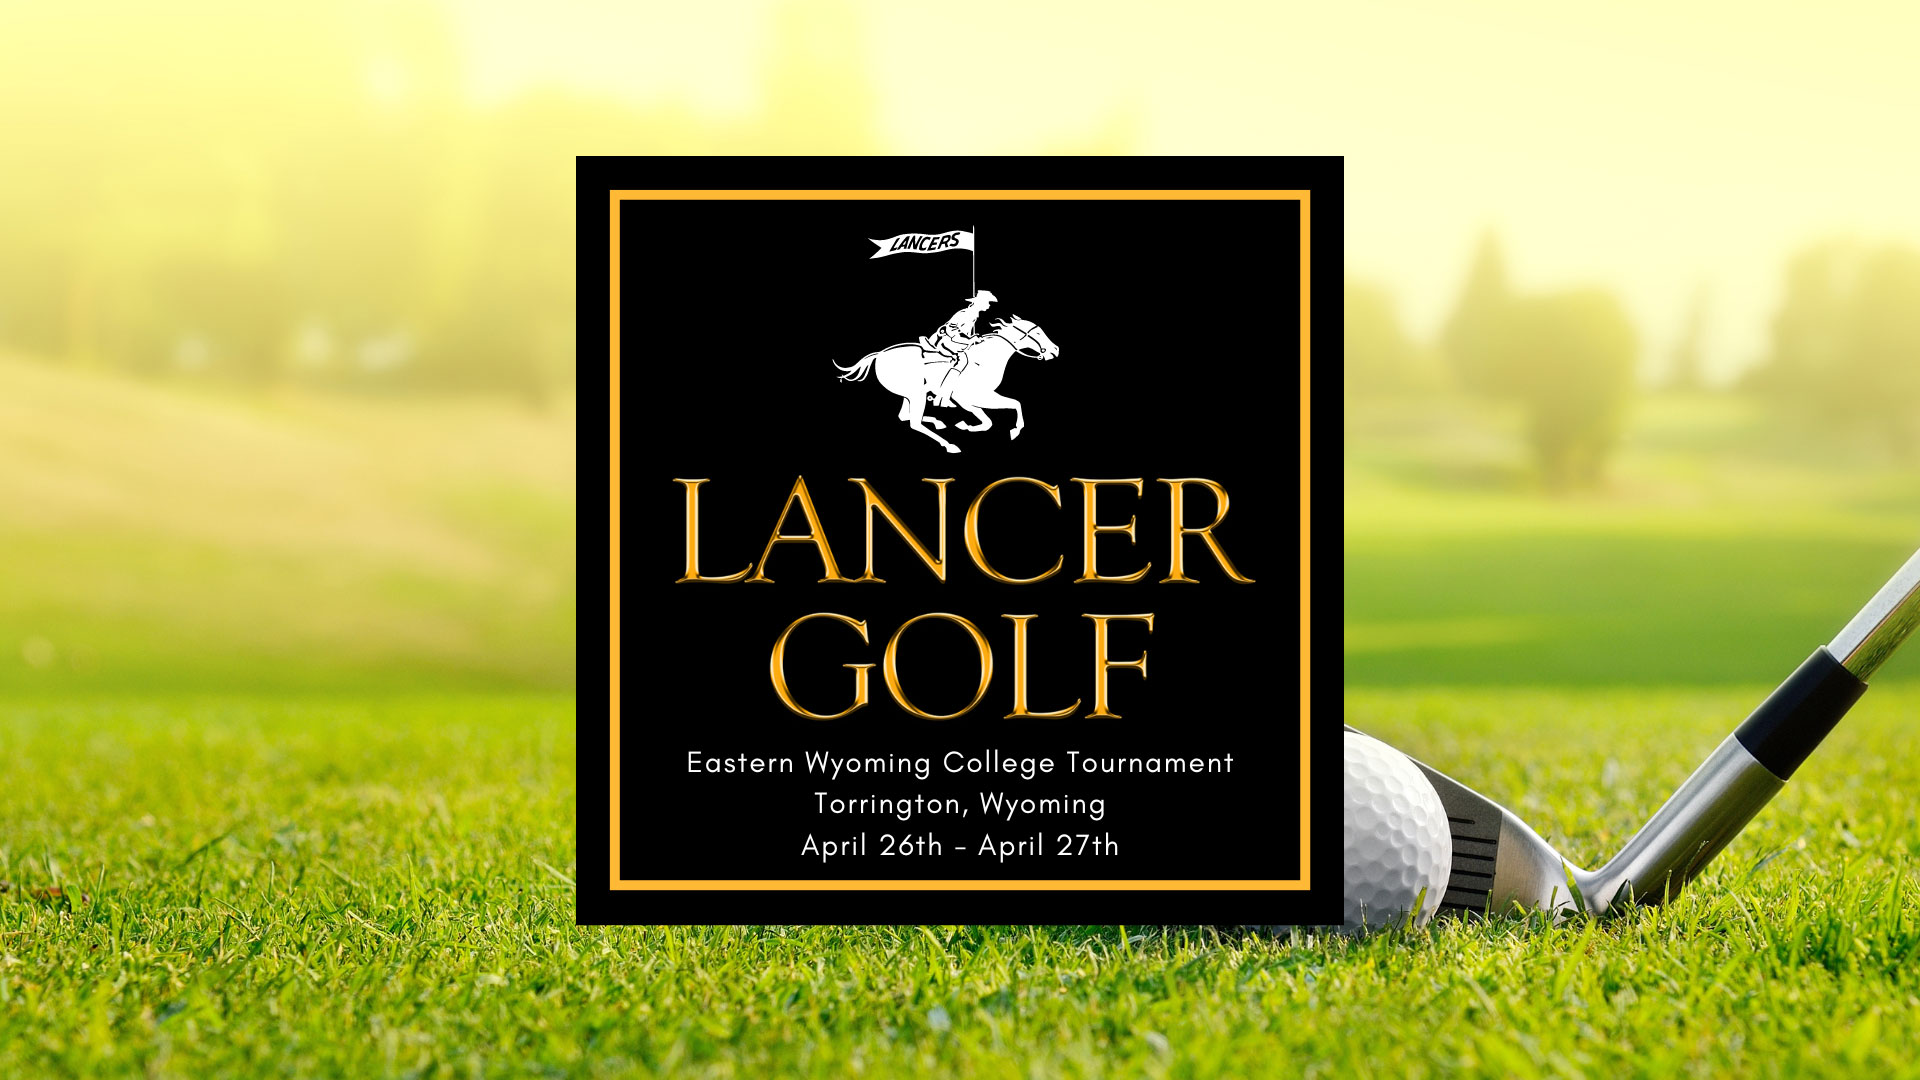 Eastern Wyoming College - Lancer Golf Tournament